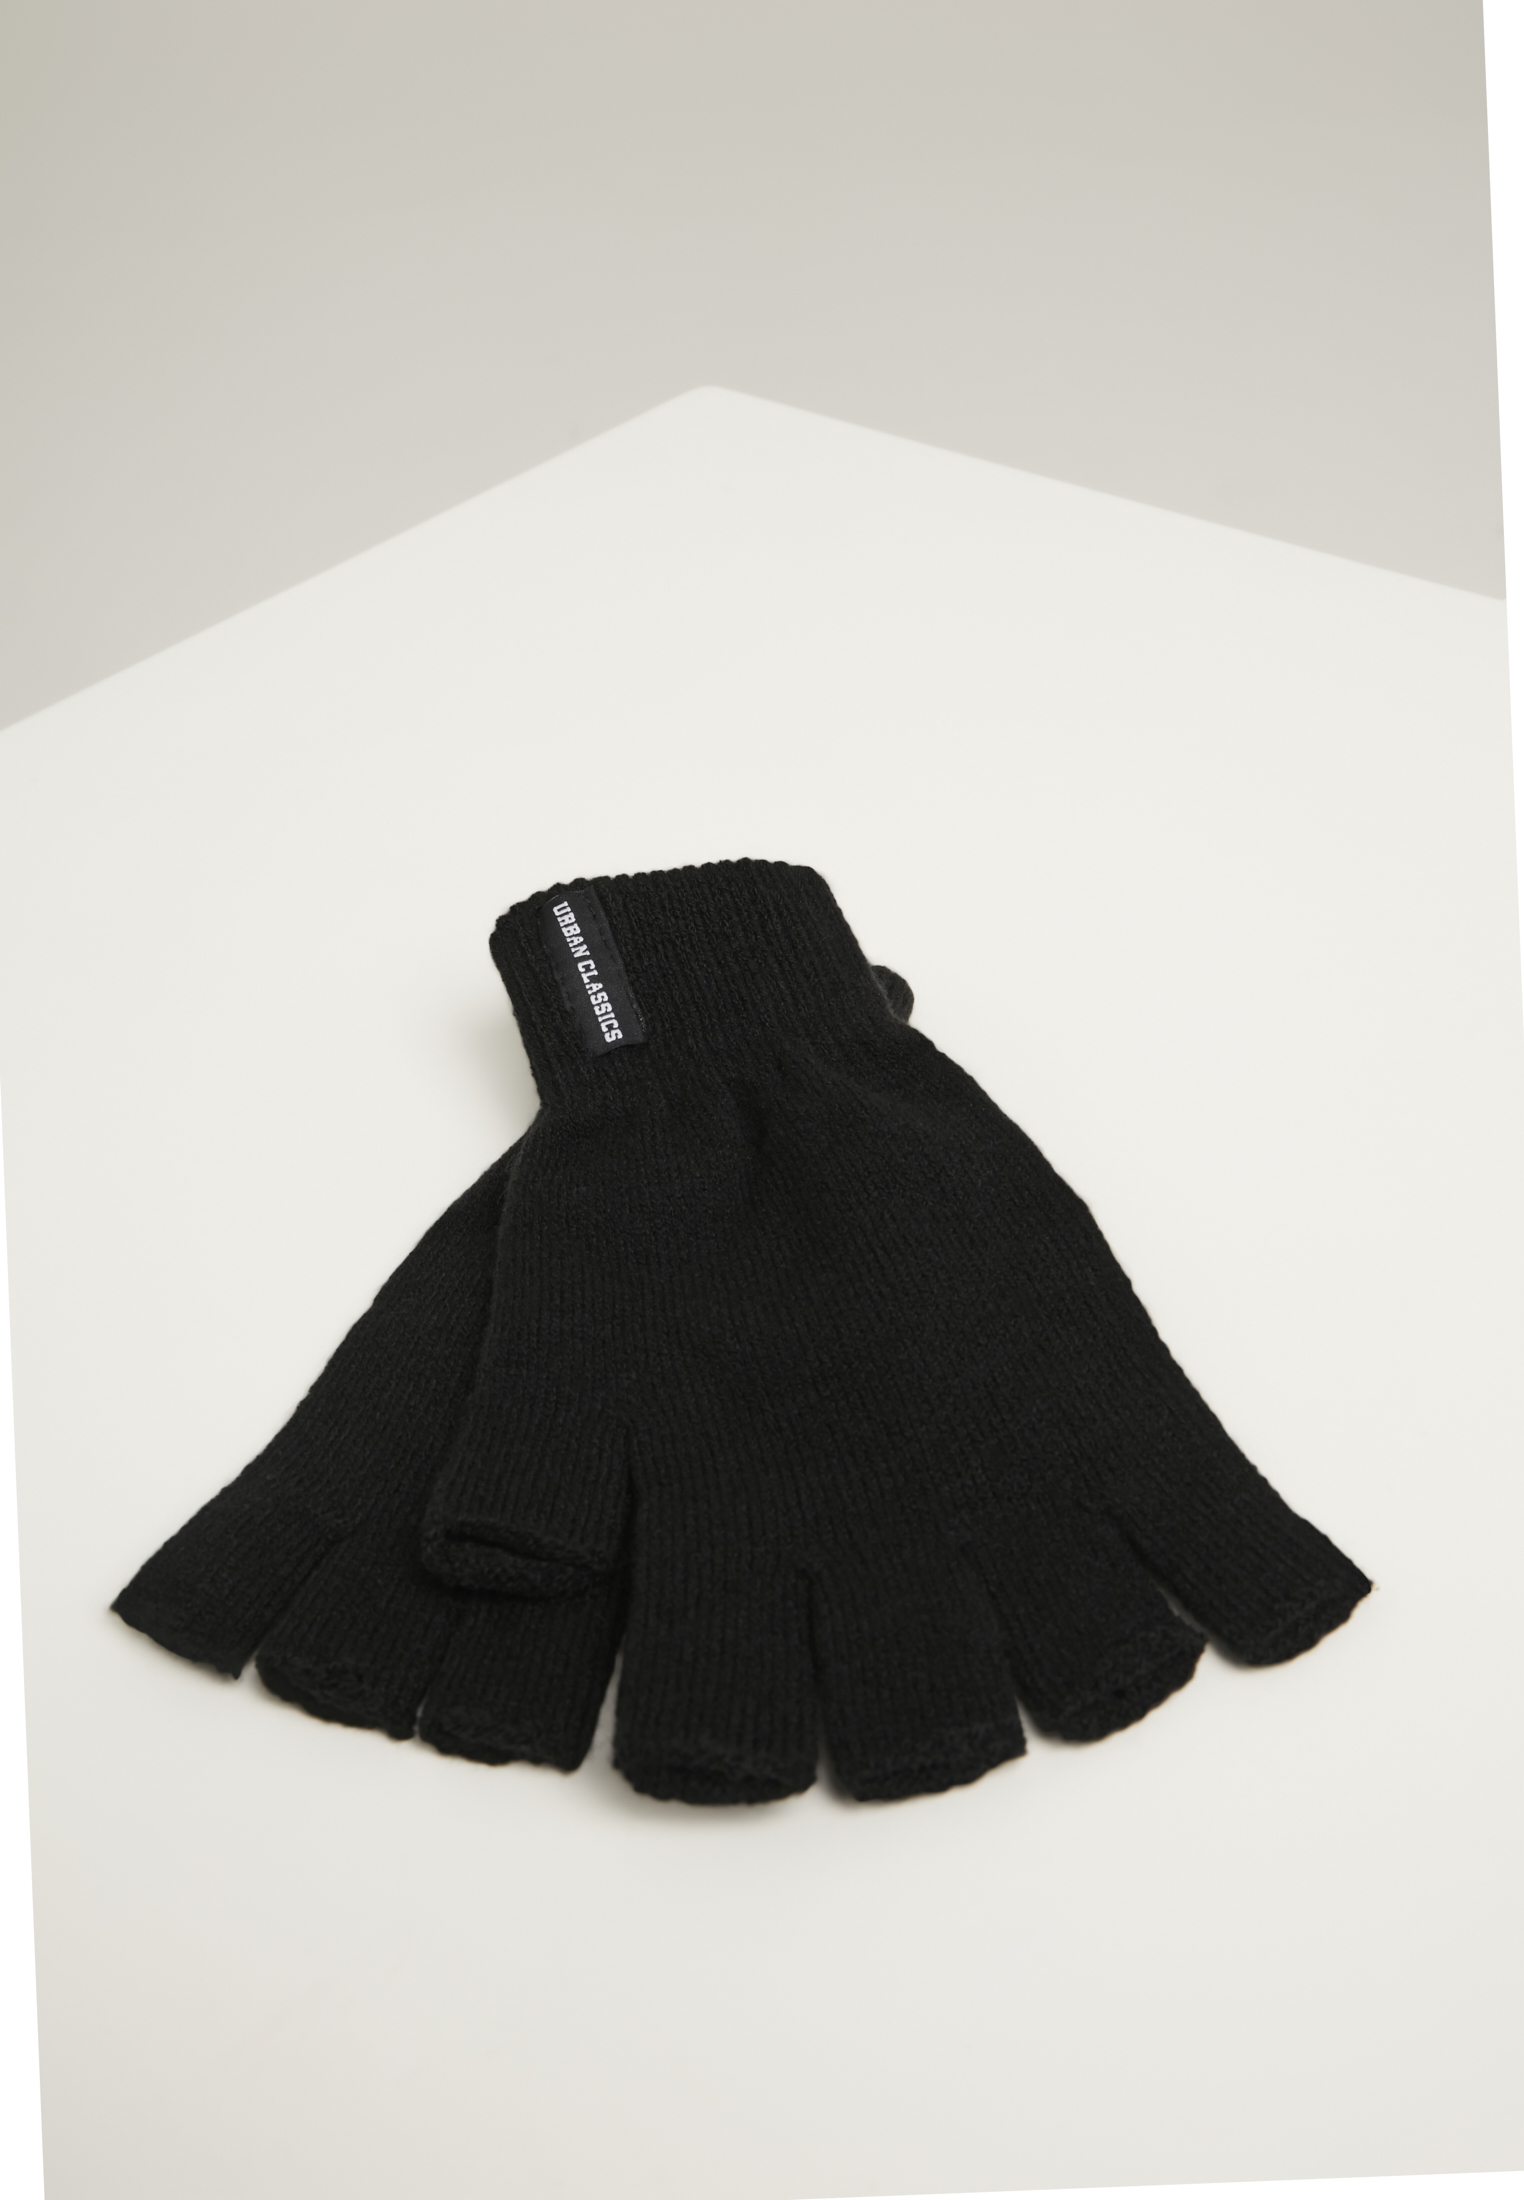 Half-finger gloves 2-pack black